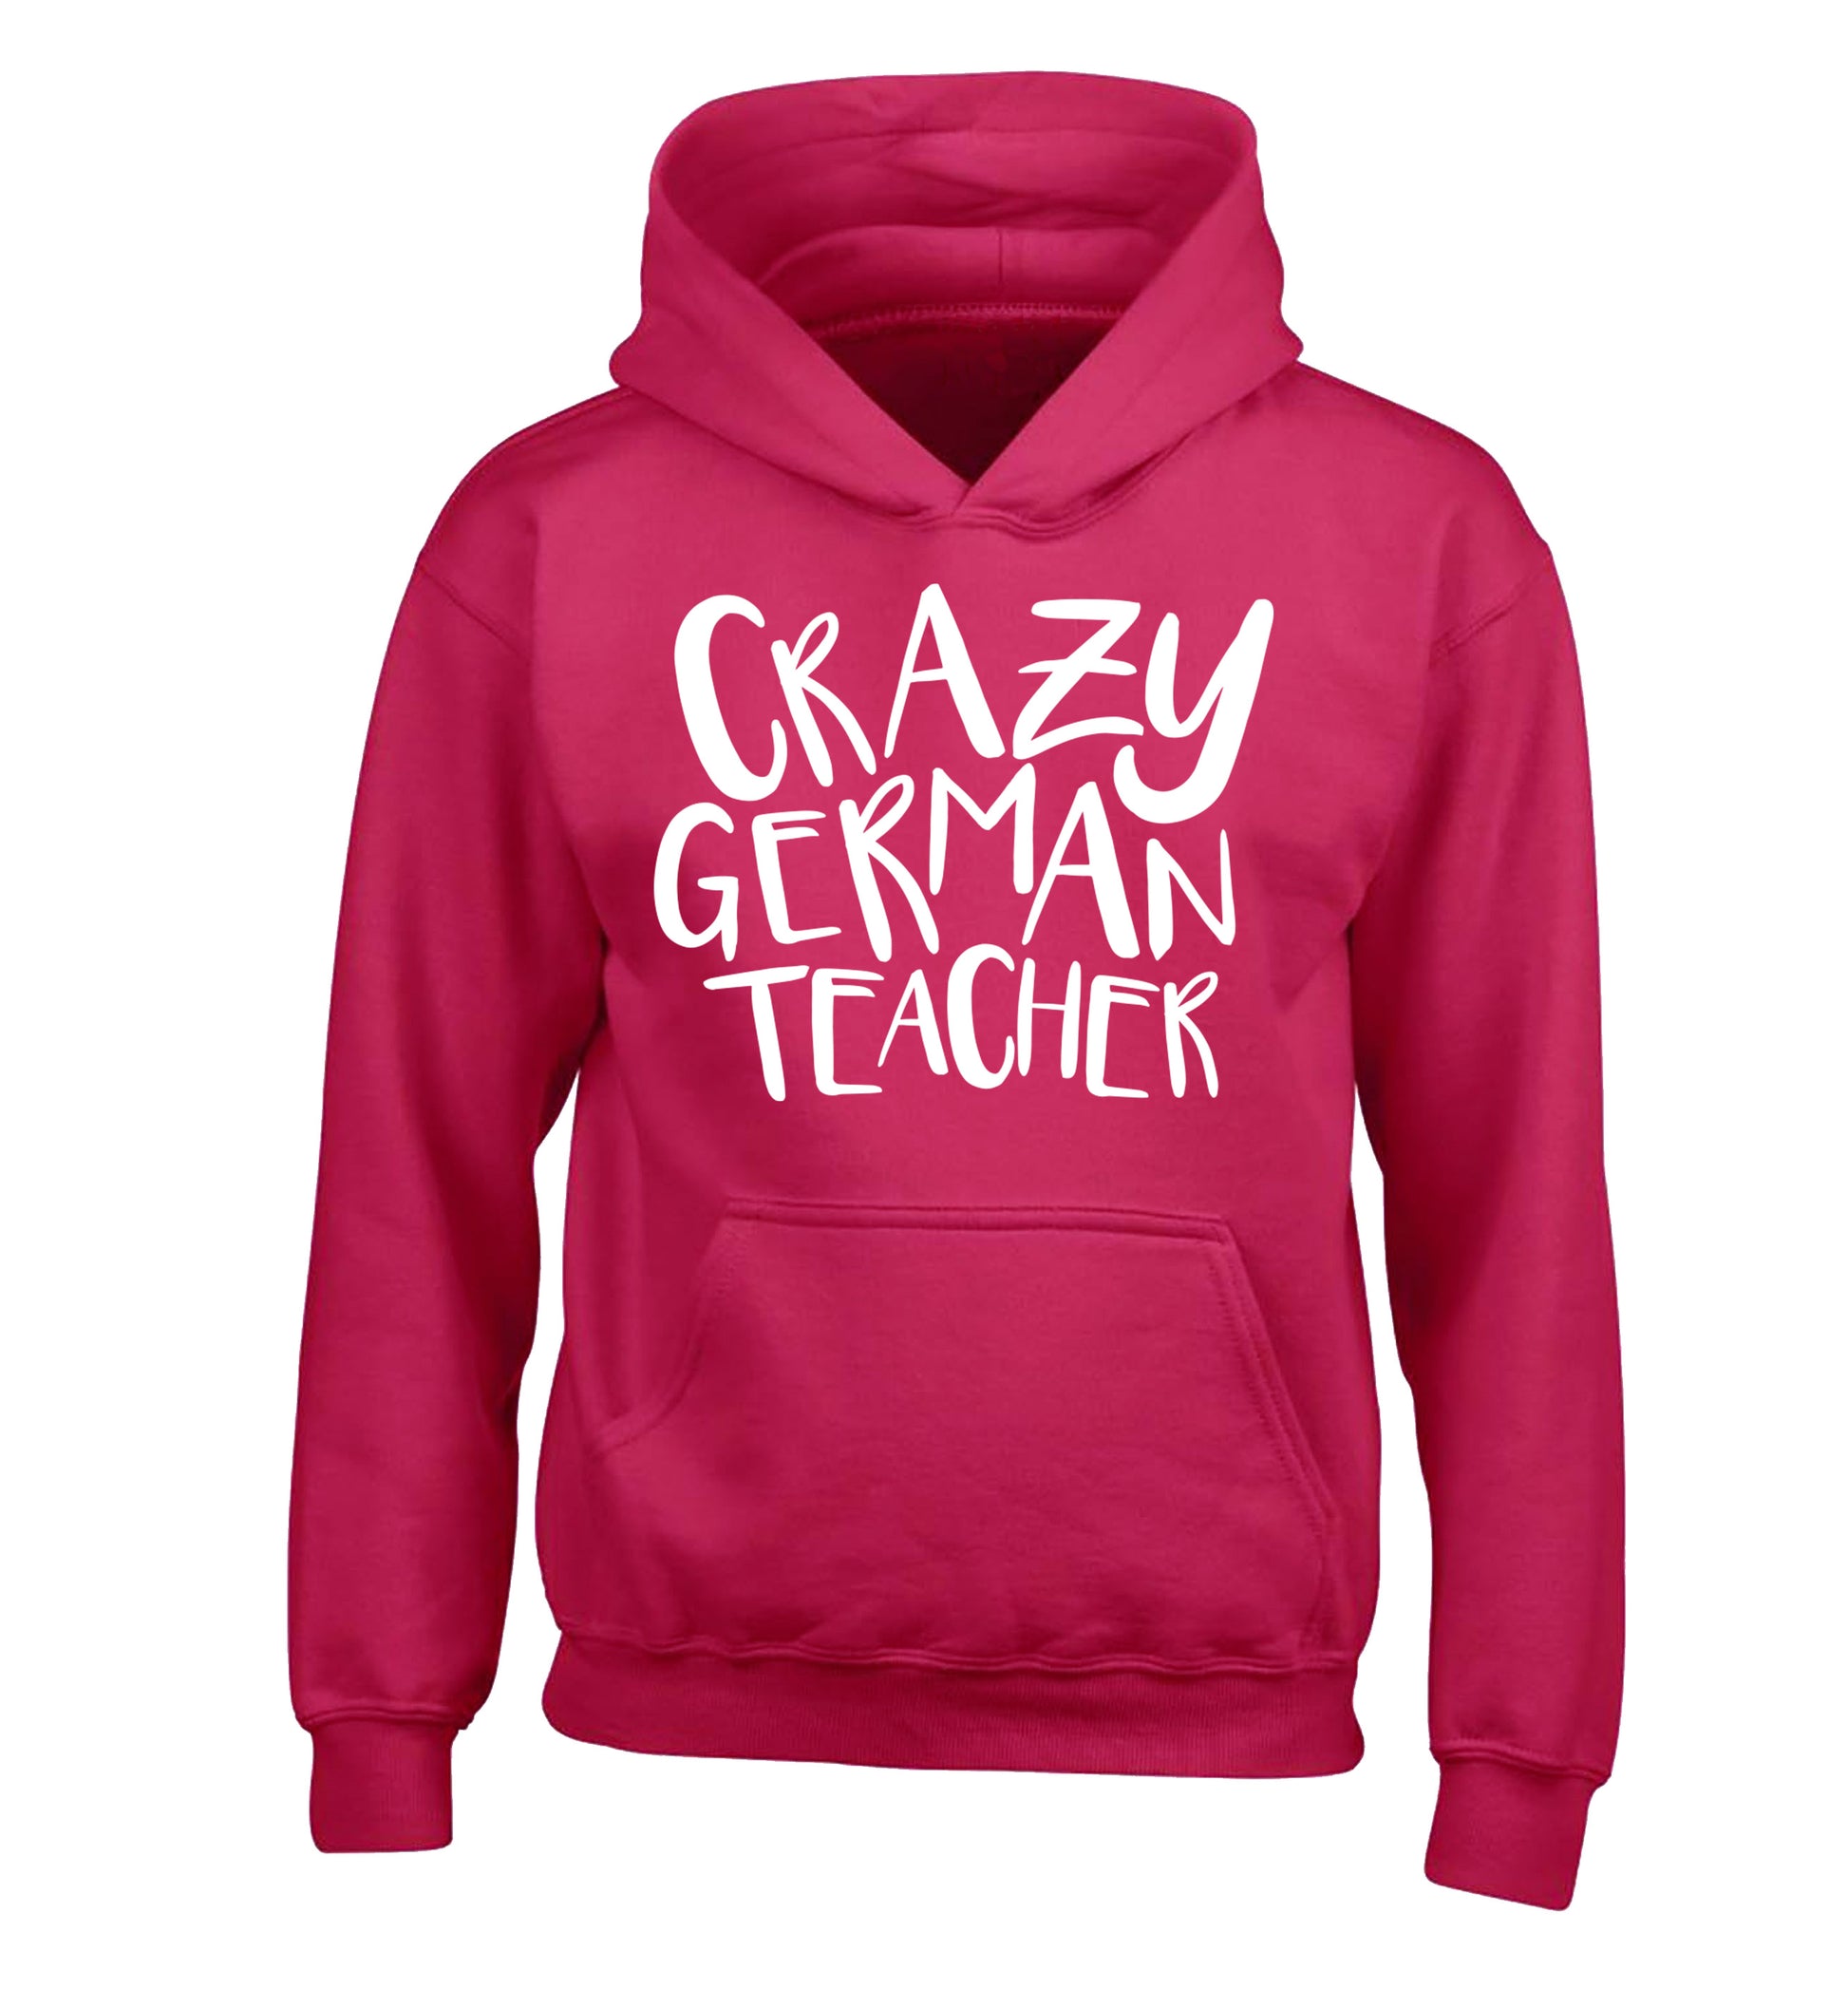 Crazy german teacher children's pink hoodie 12-13 Years